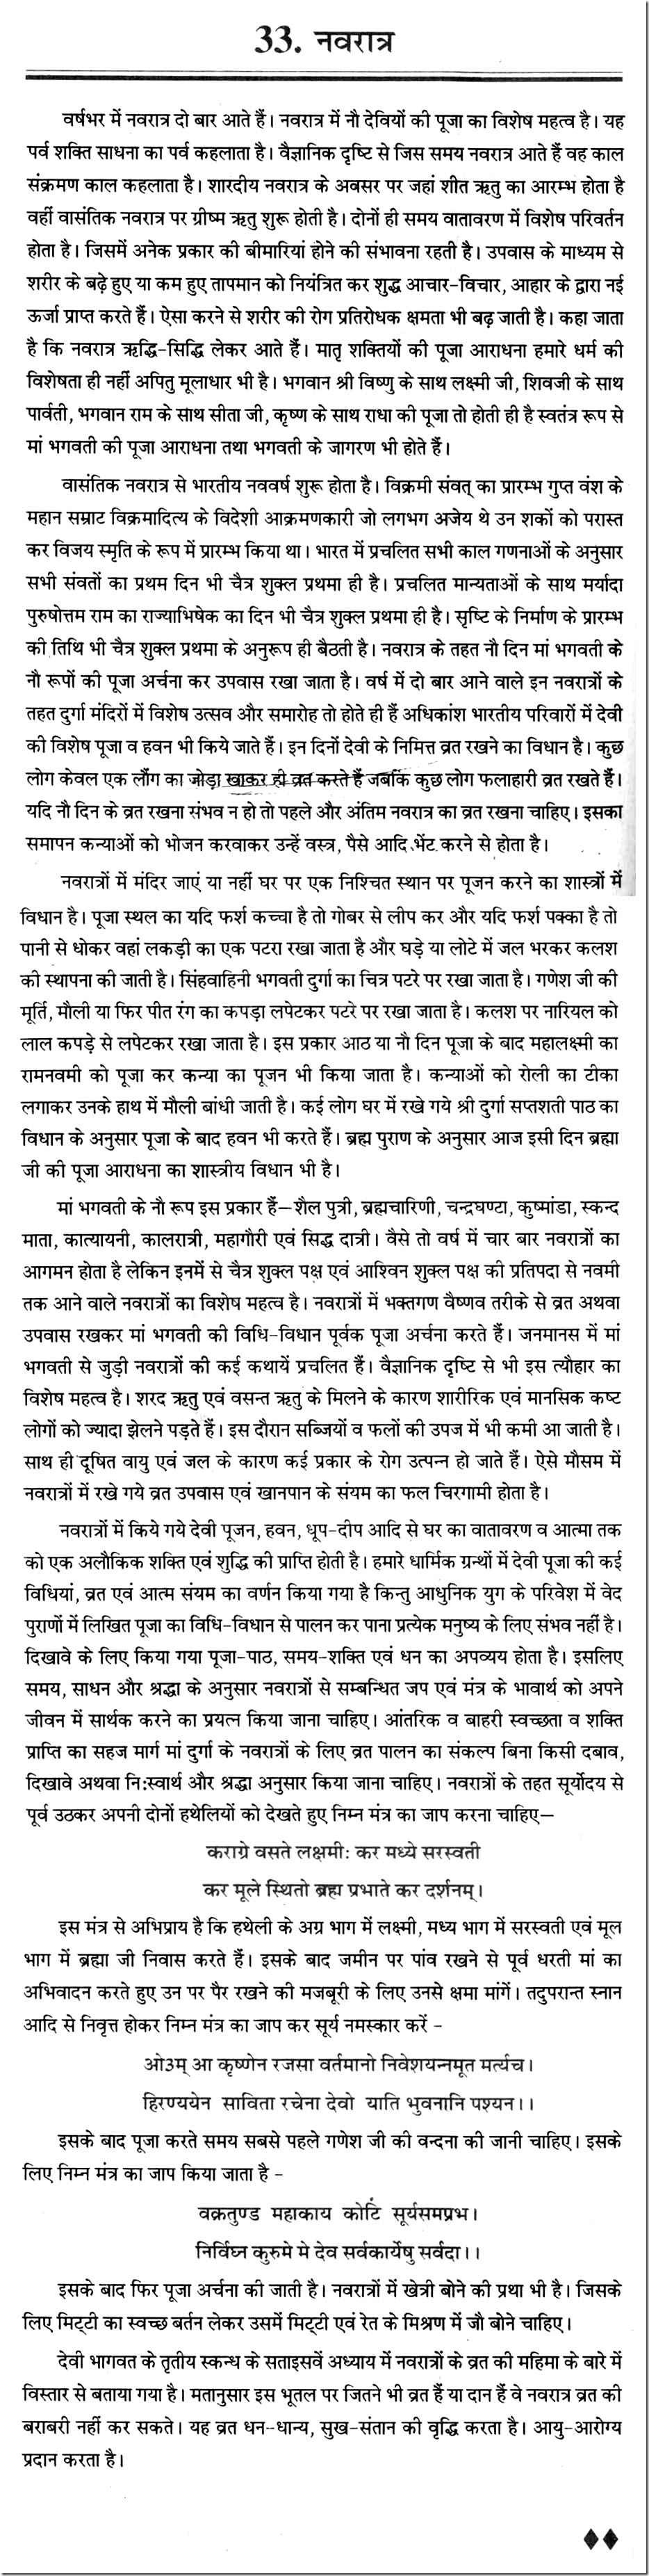 essay writing on durga puja in hindi